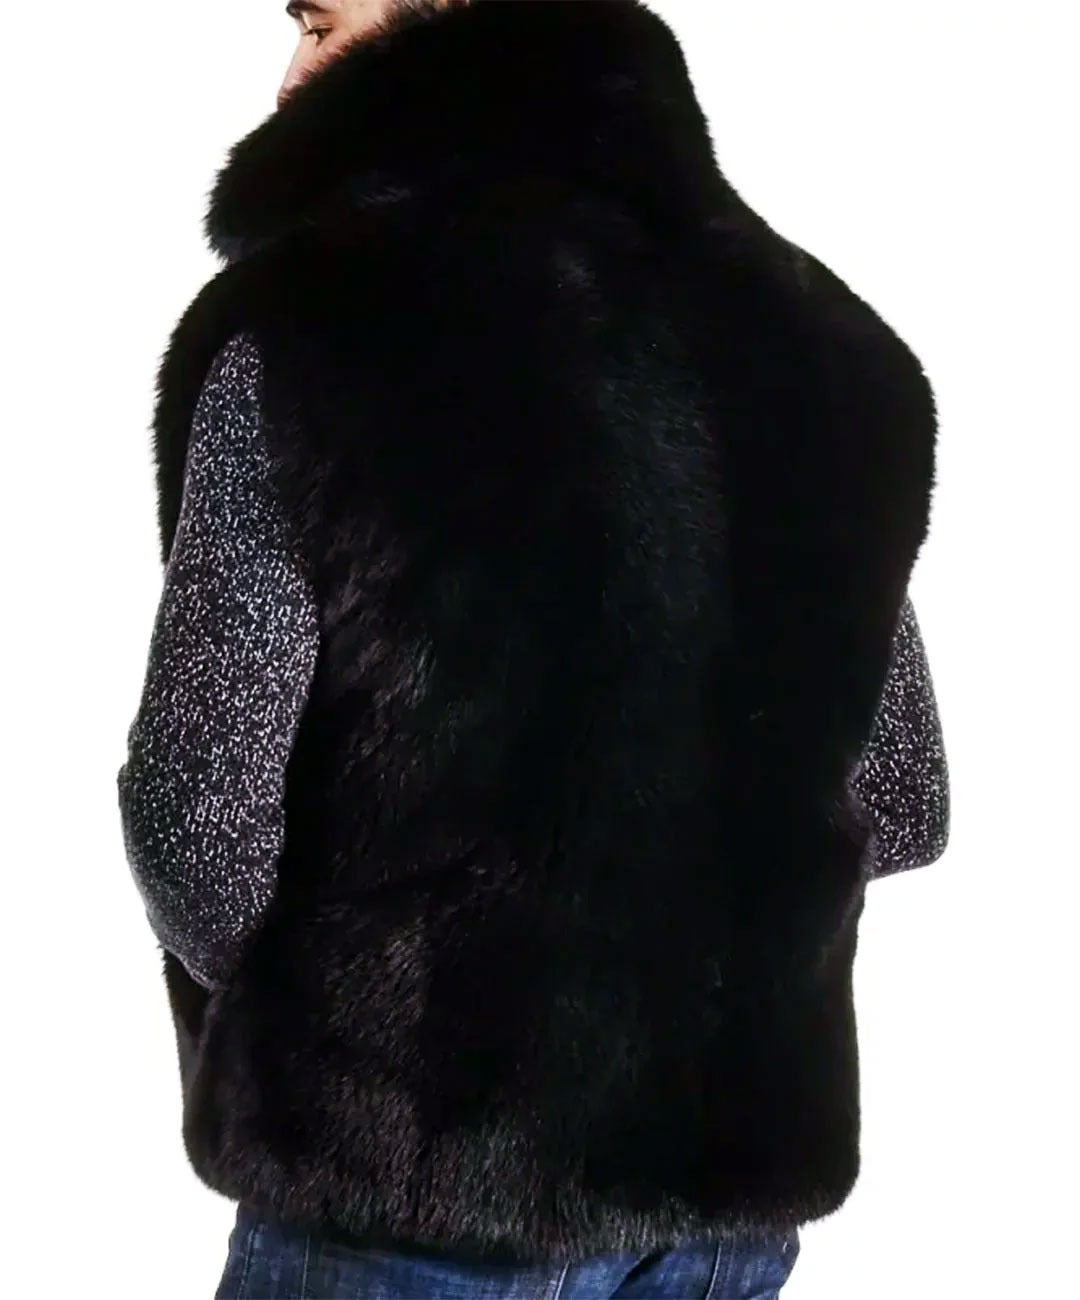 Men's Black Fox Fur Vest